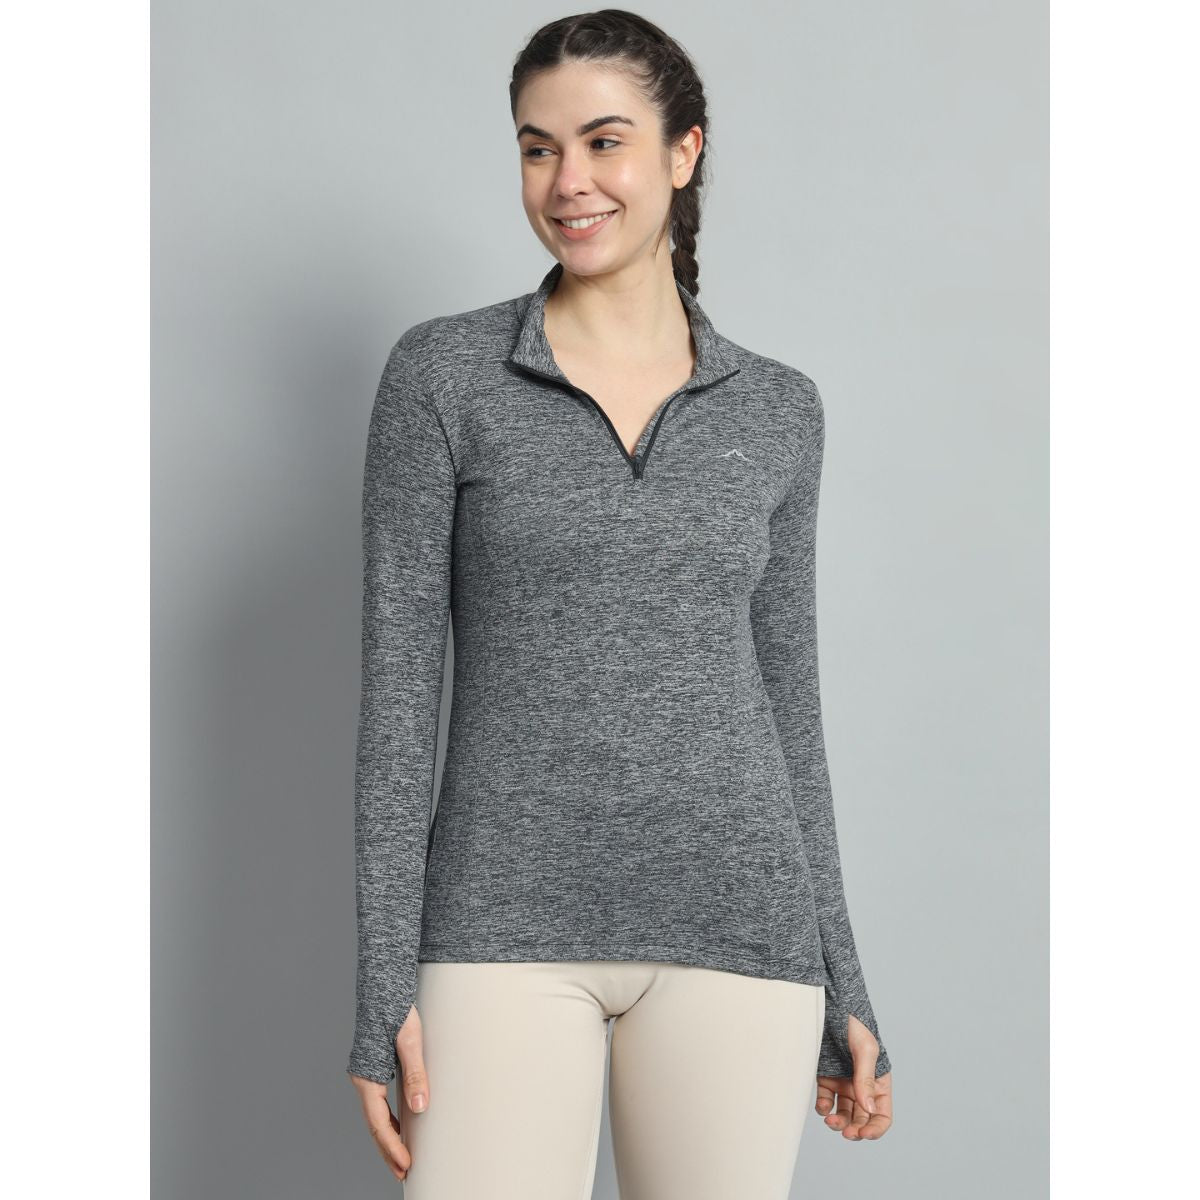 Women's Nomadic Full Sleeves T-Shirt / Baselayer - Charcoal Gray 6